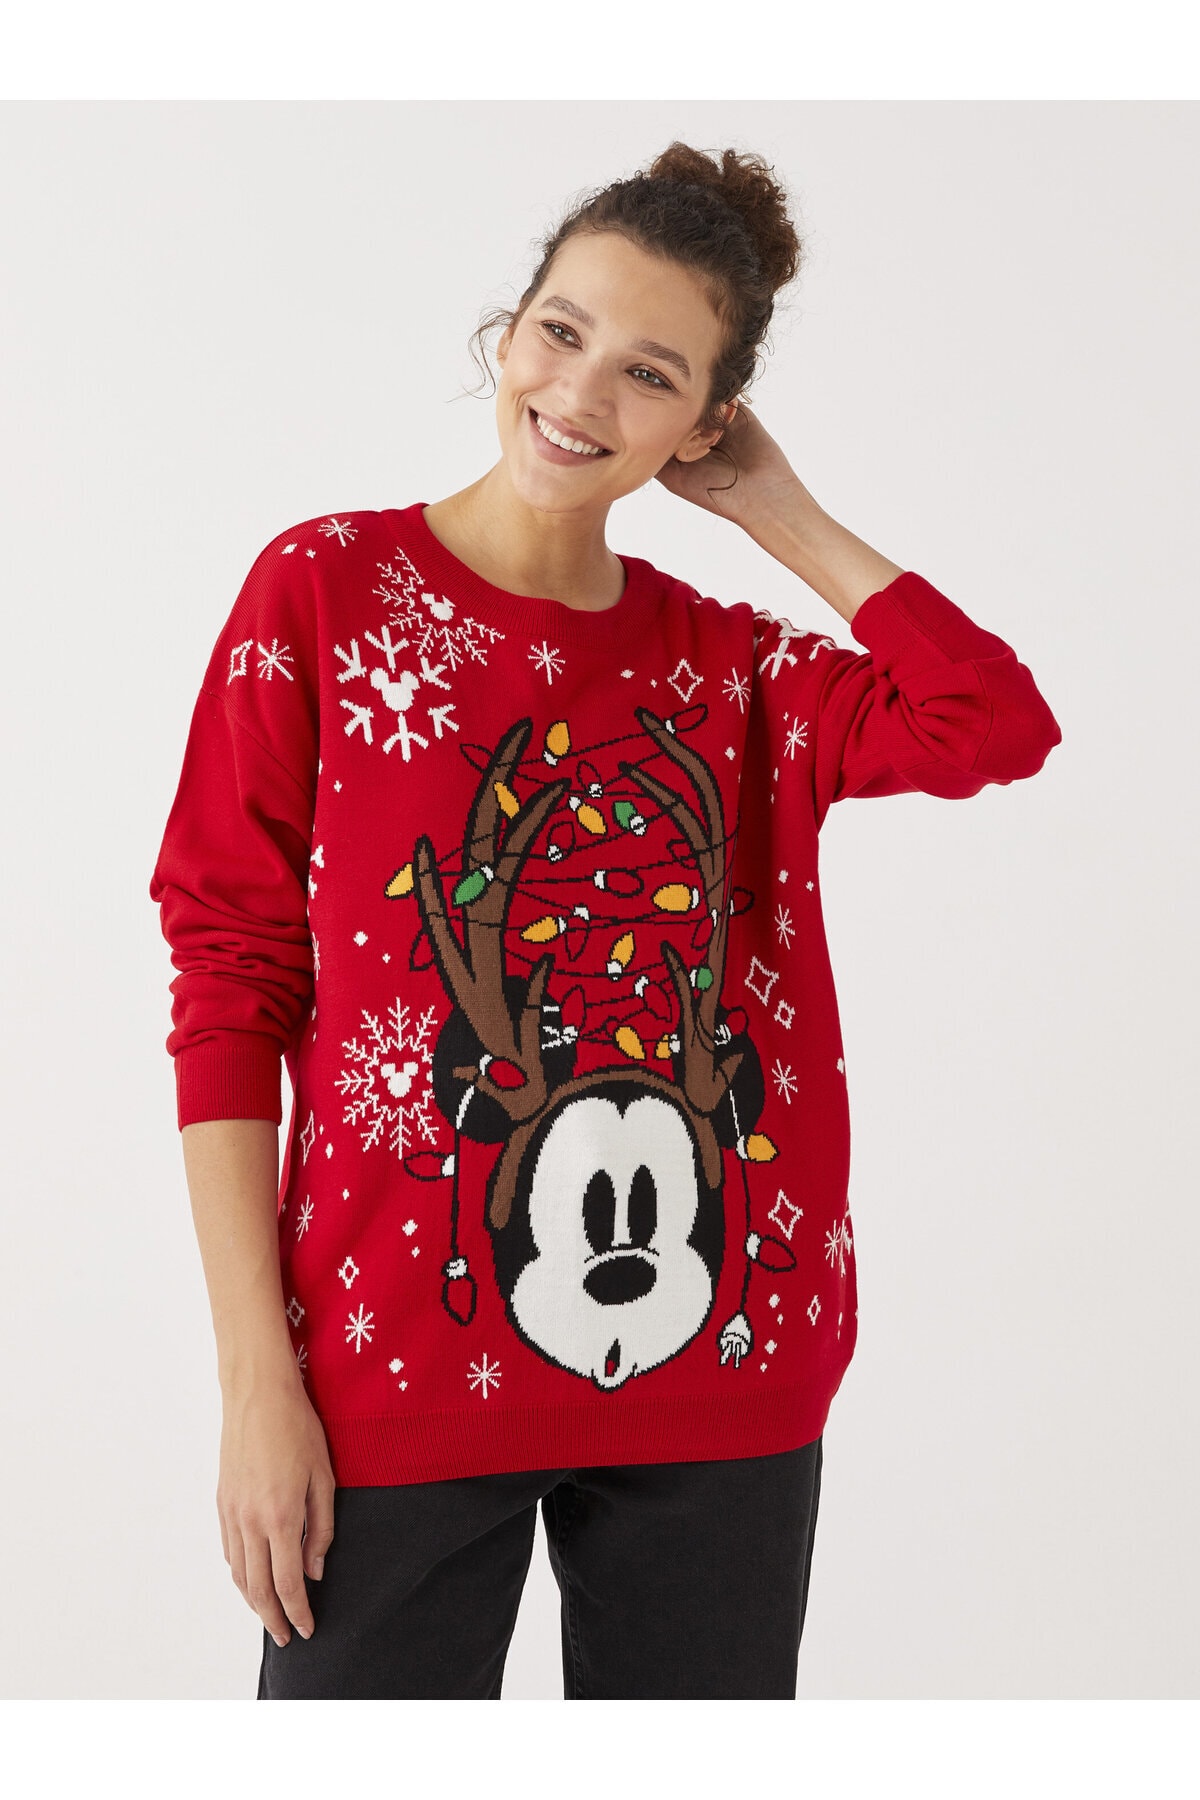 LC Waikiki Crew Neck Mickey Mouse Printed Long Sleeve Women's Knitwear Sweater